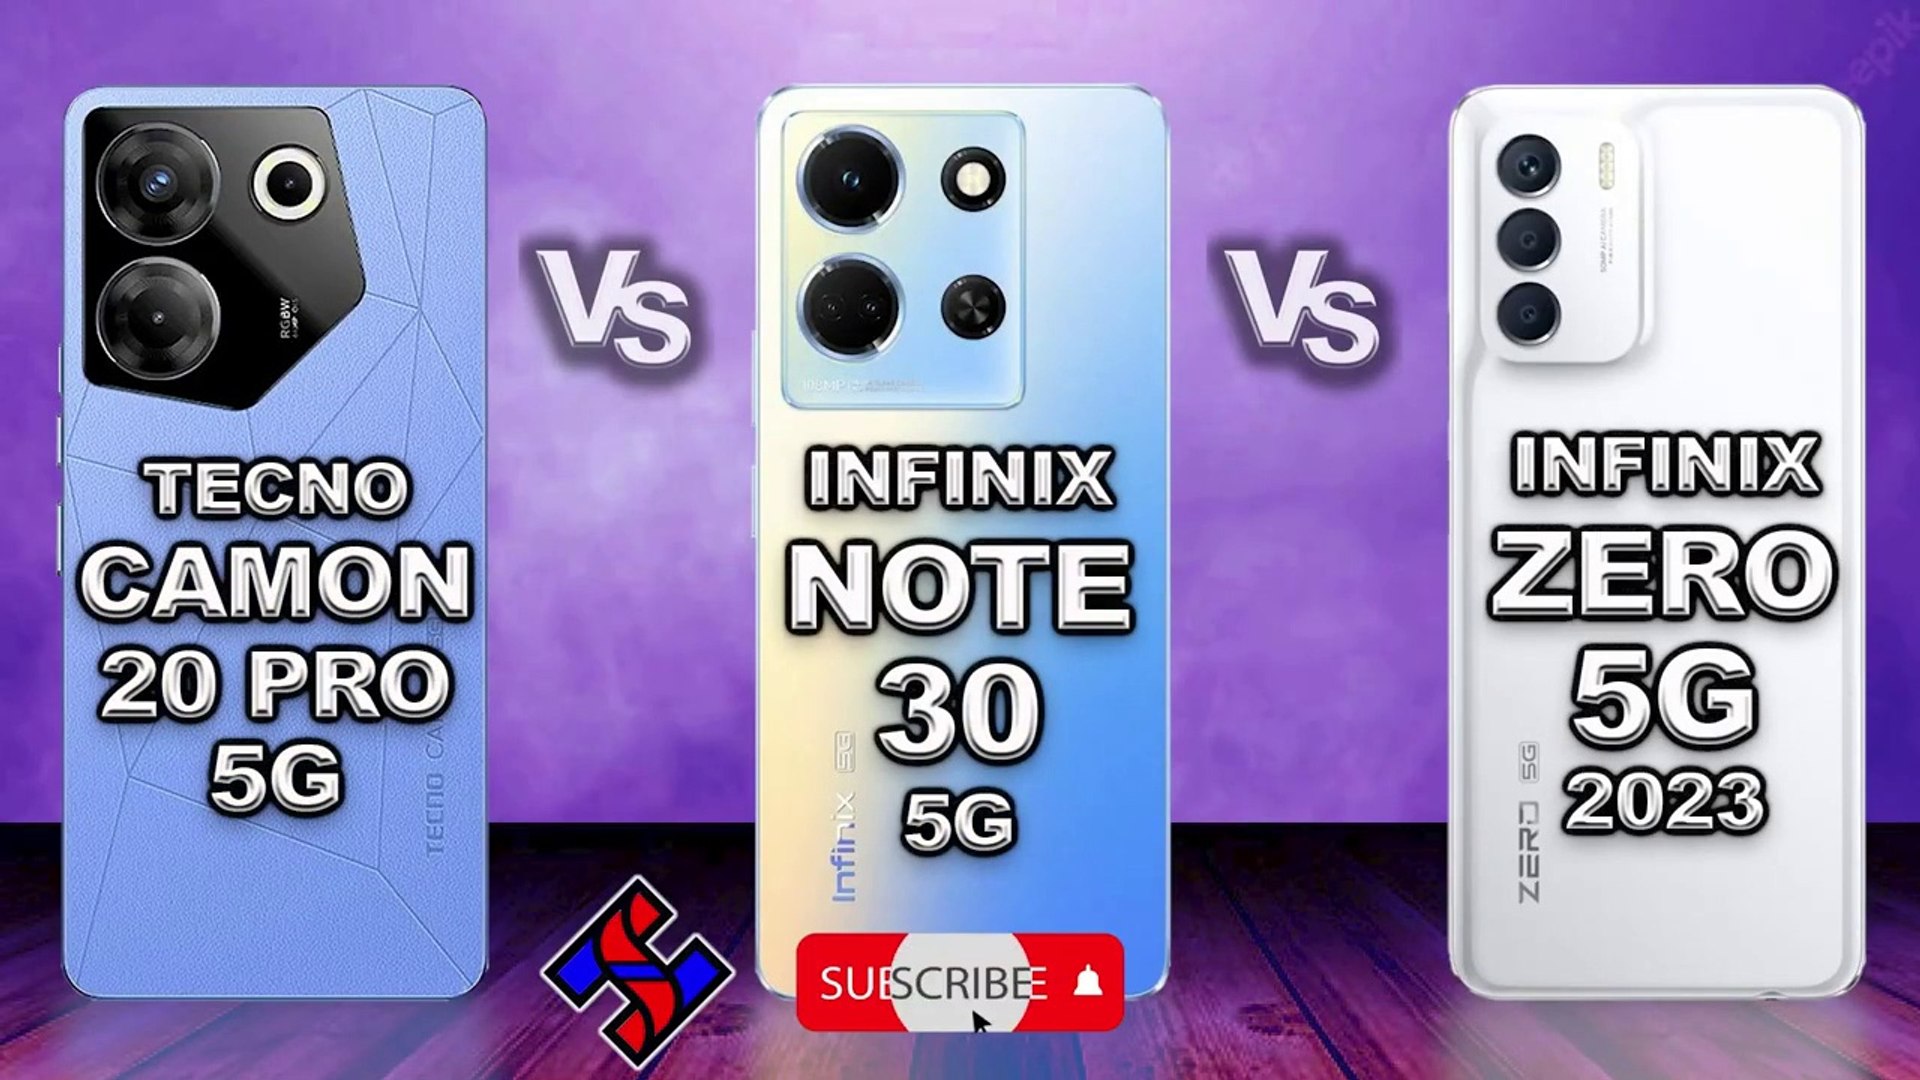 Tecno Camon 20 Pro vs Infinix Note 30 5G 256GB vs Infinix Zero 5G 2023 -  video Dailymotion